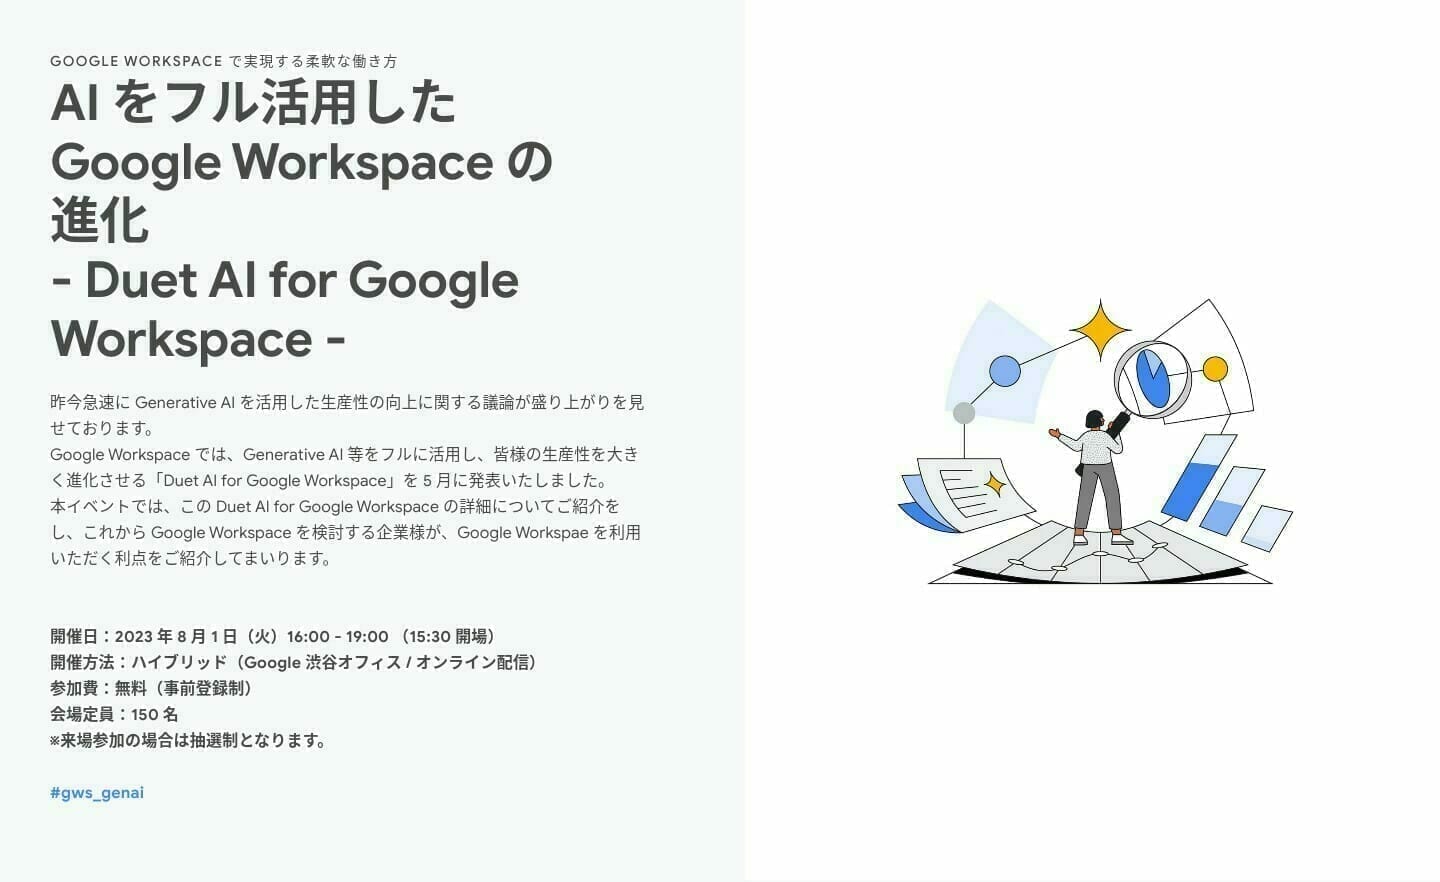 [Google Cloud] AI をフル活用した Google Workspace の 進化 - Duet AI for Google Workspace -